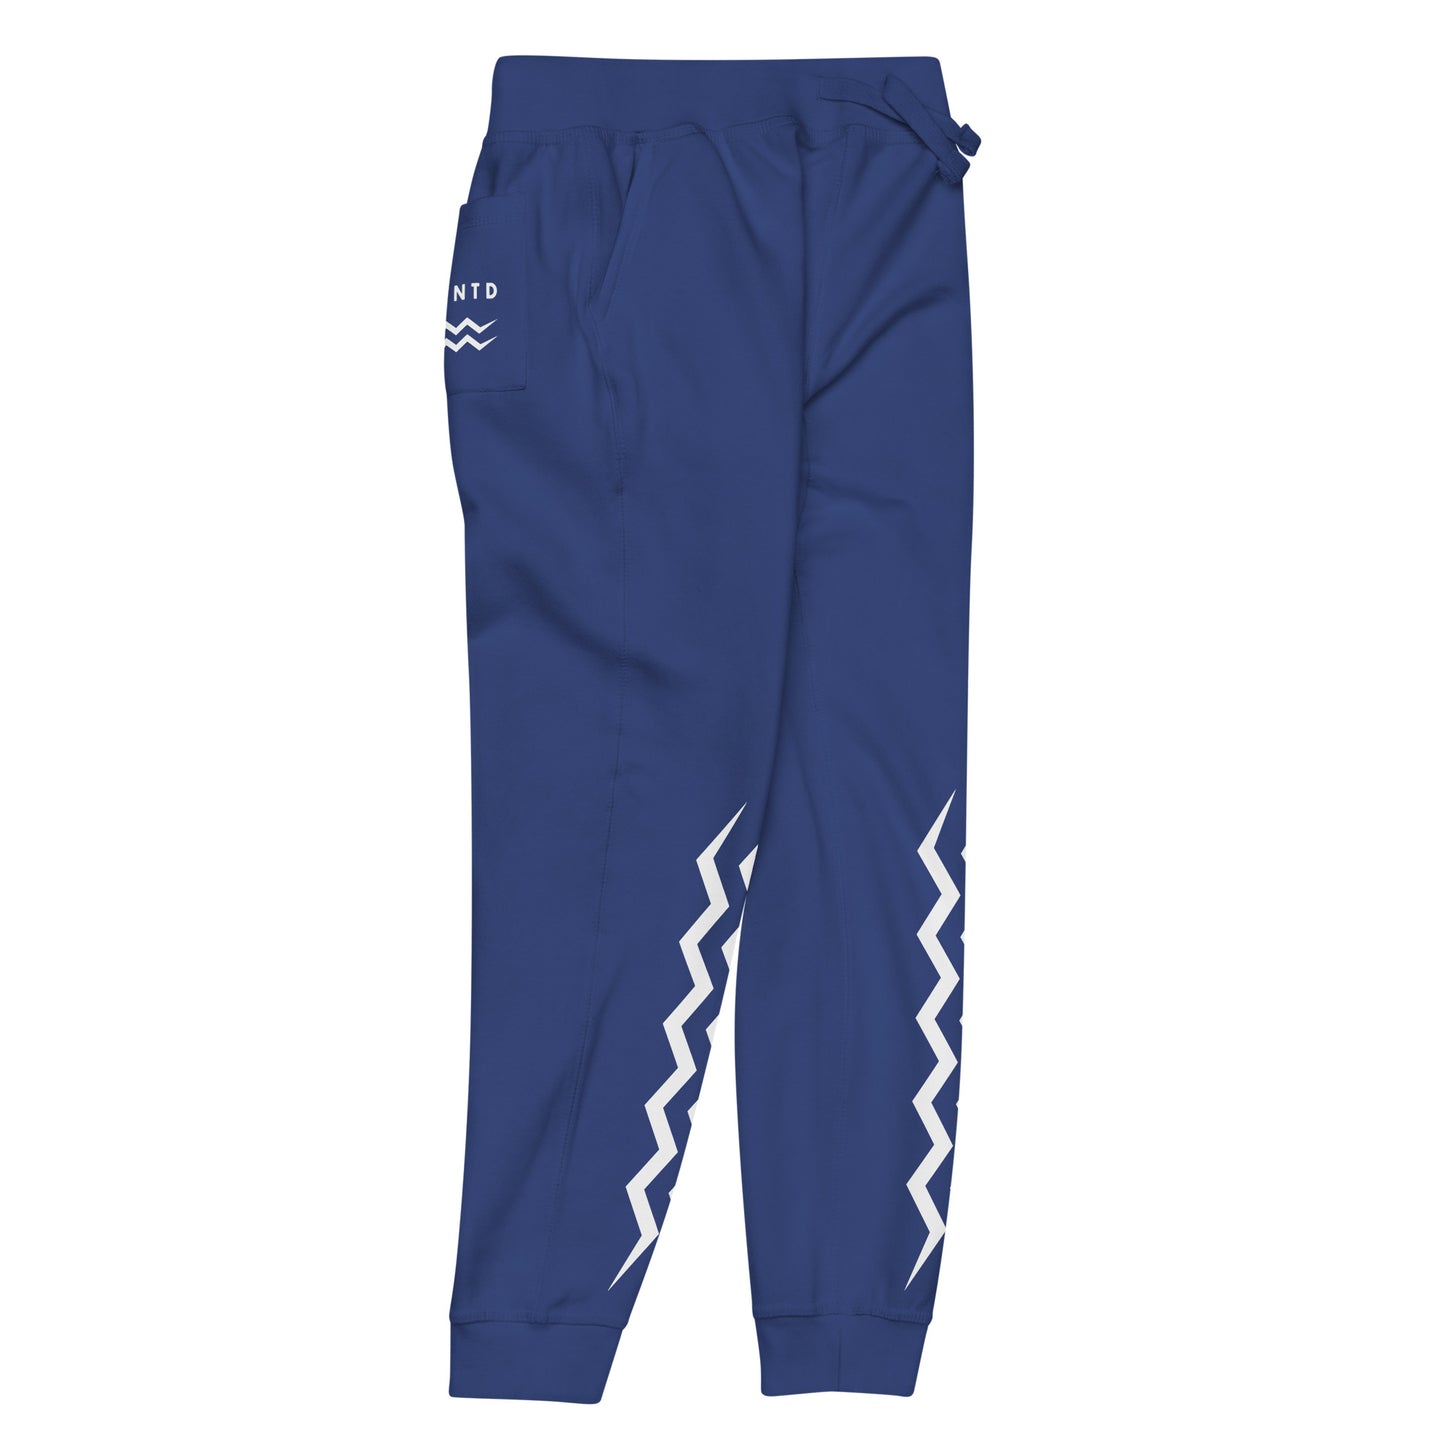 ANOYNTD [ZIGZAG] Series Unisex fleece sweatpants